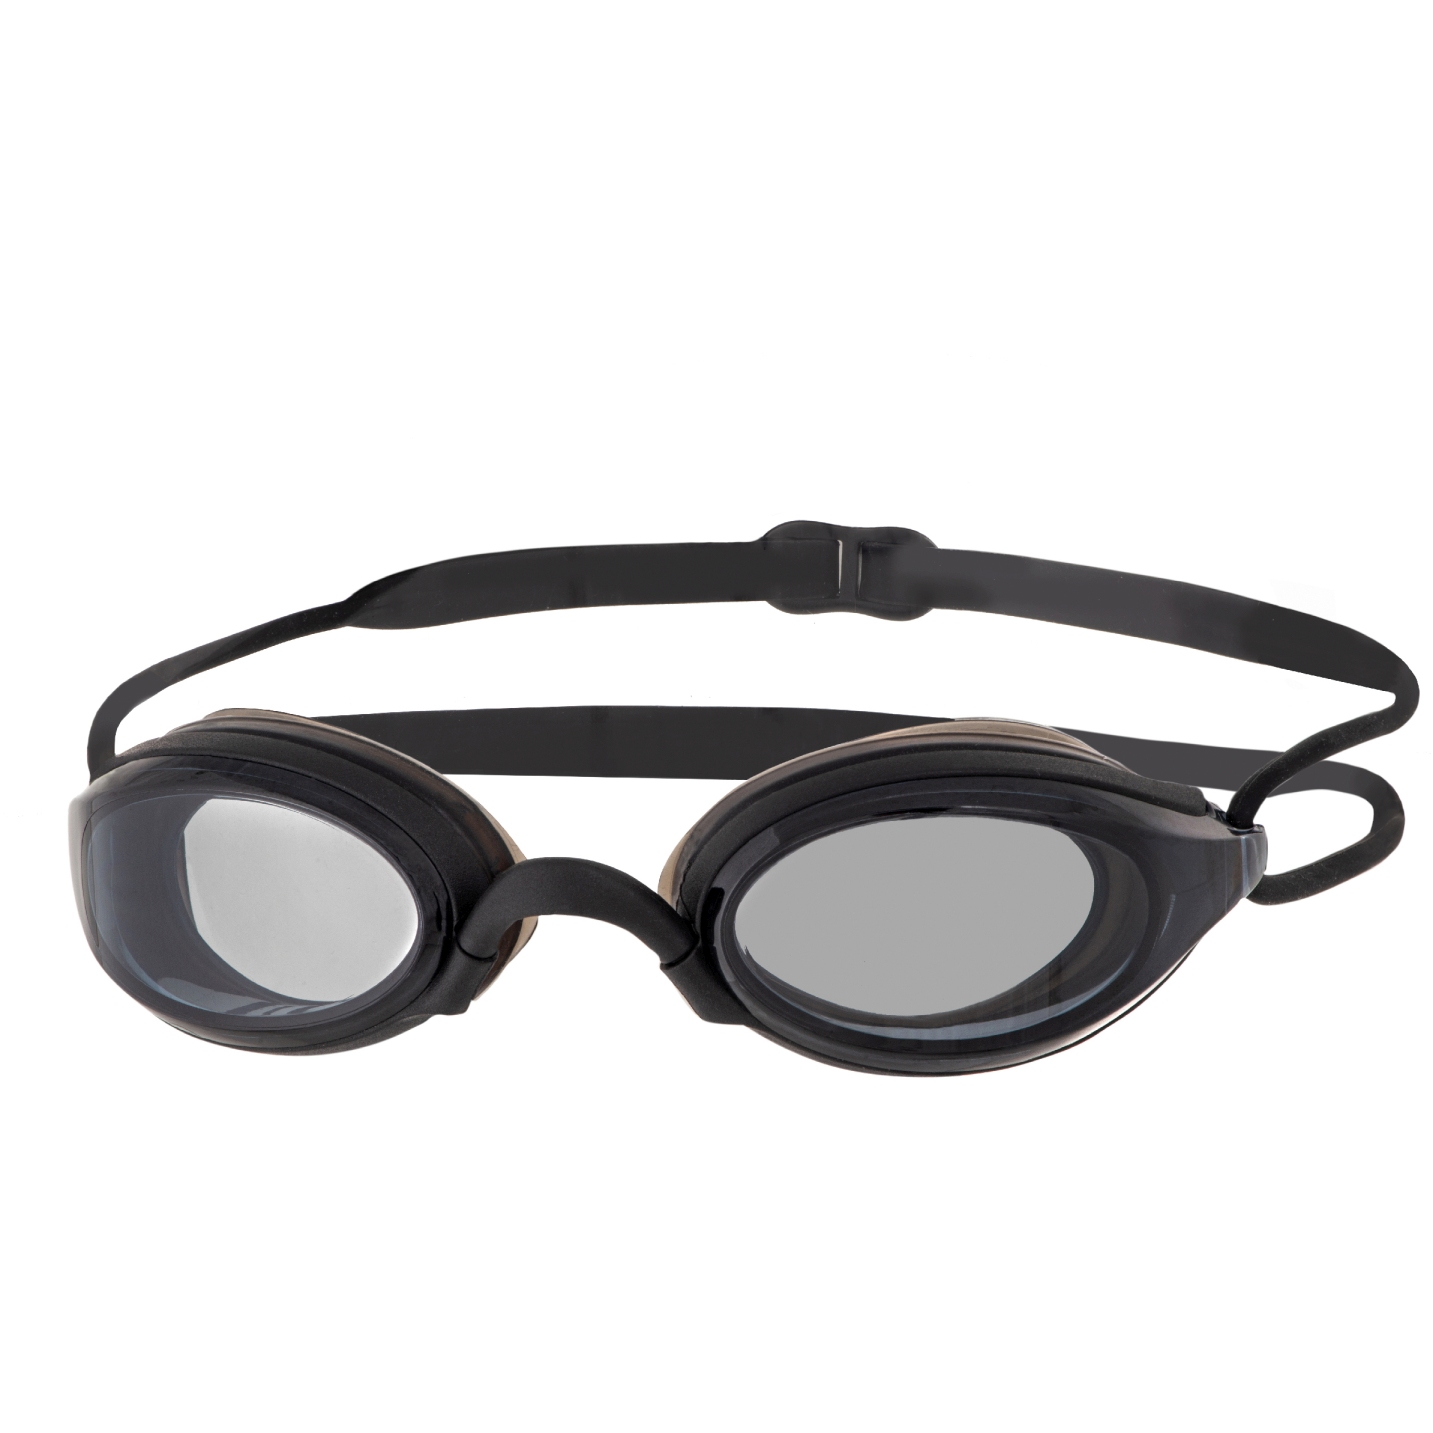 Productfoto van Zoggs Fusion Air Swim Goggles - Black/Black/Smoke